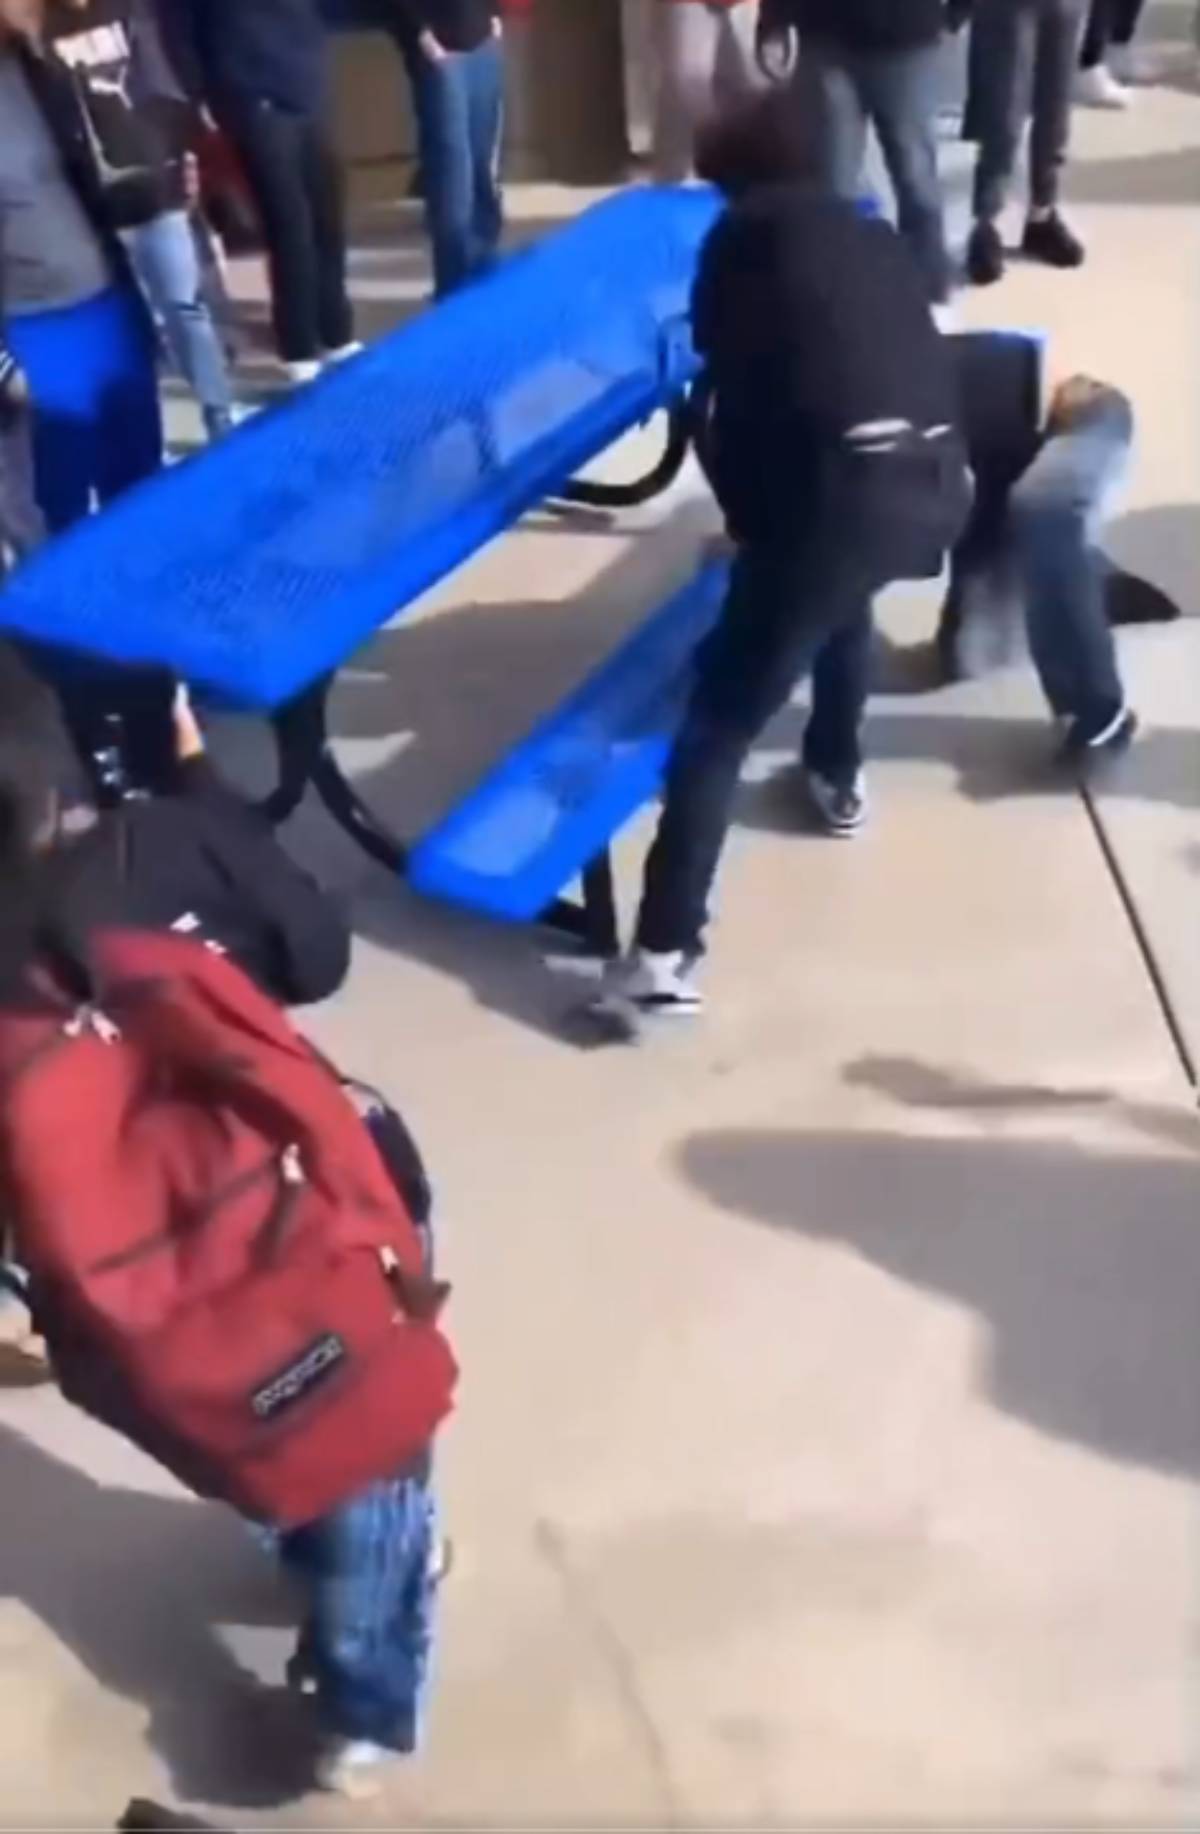 Real Link Full Video Chandler High School Stabbing Fight Videos Viral on Twitter